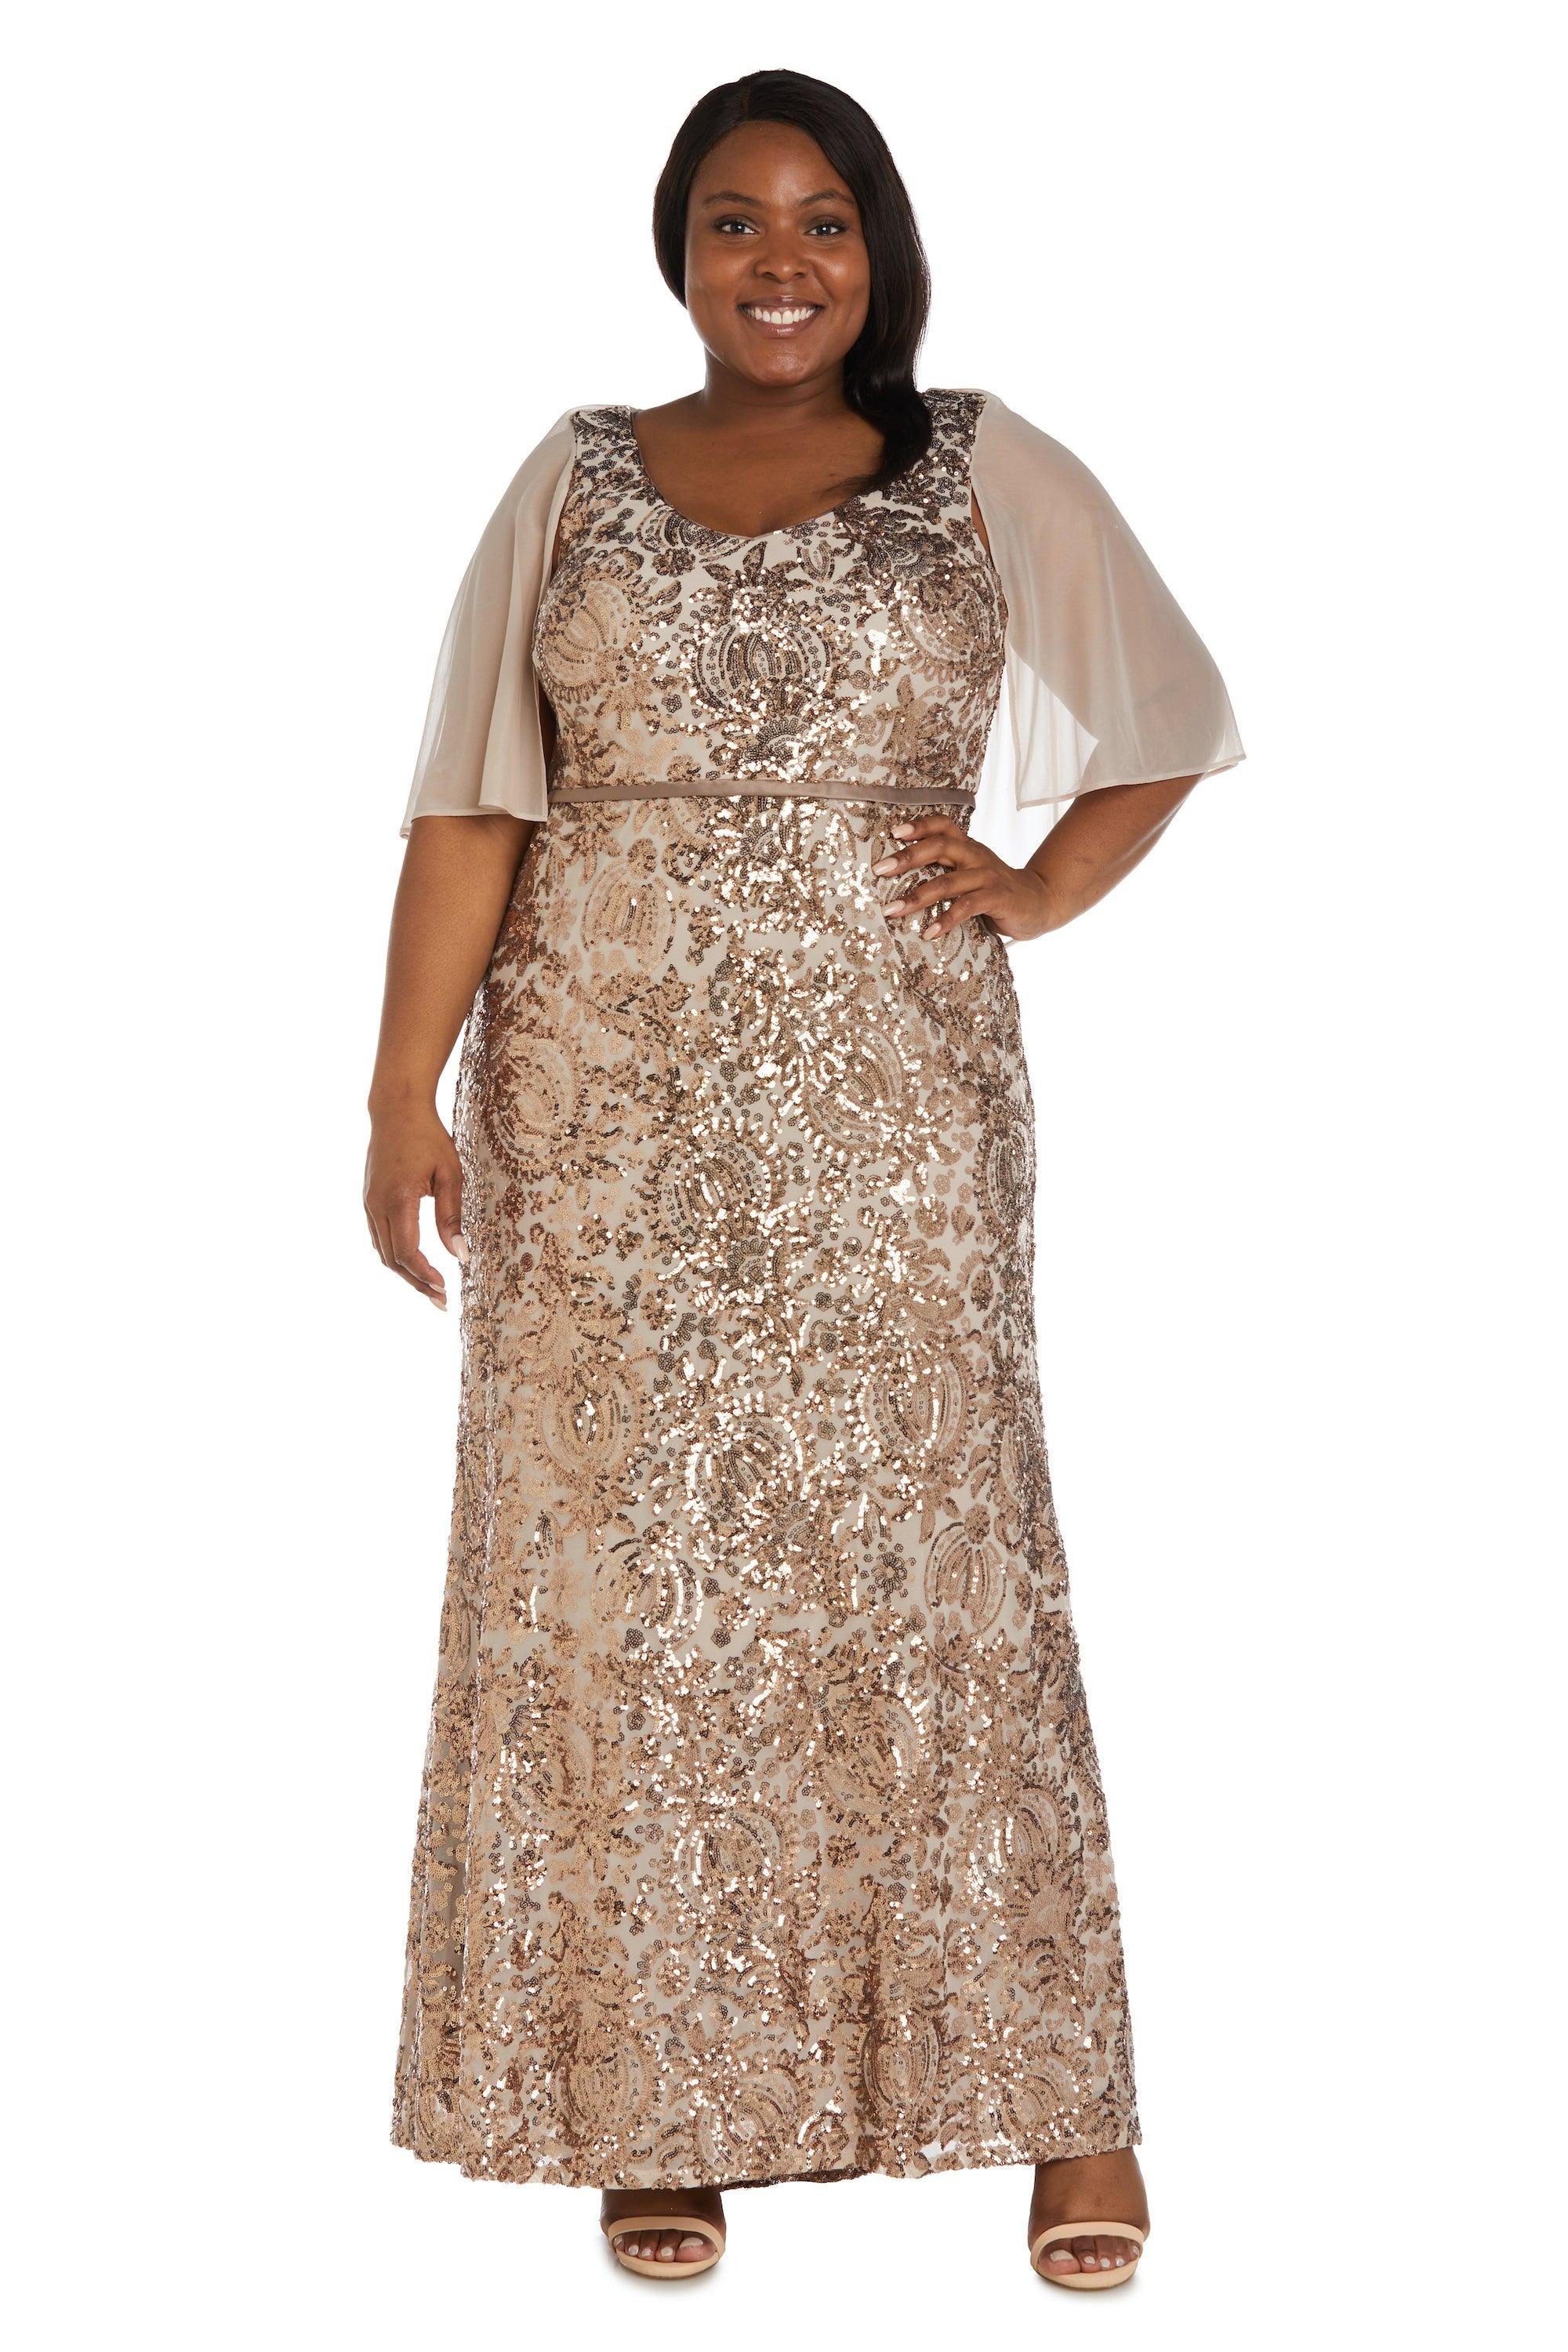 R&M Richards Long Pus Size Formal Dress 9209W - The Dress Outlet